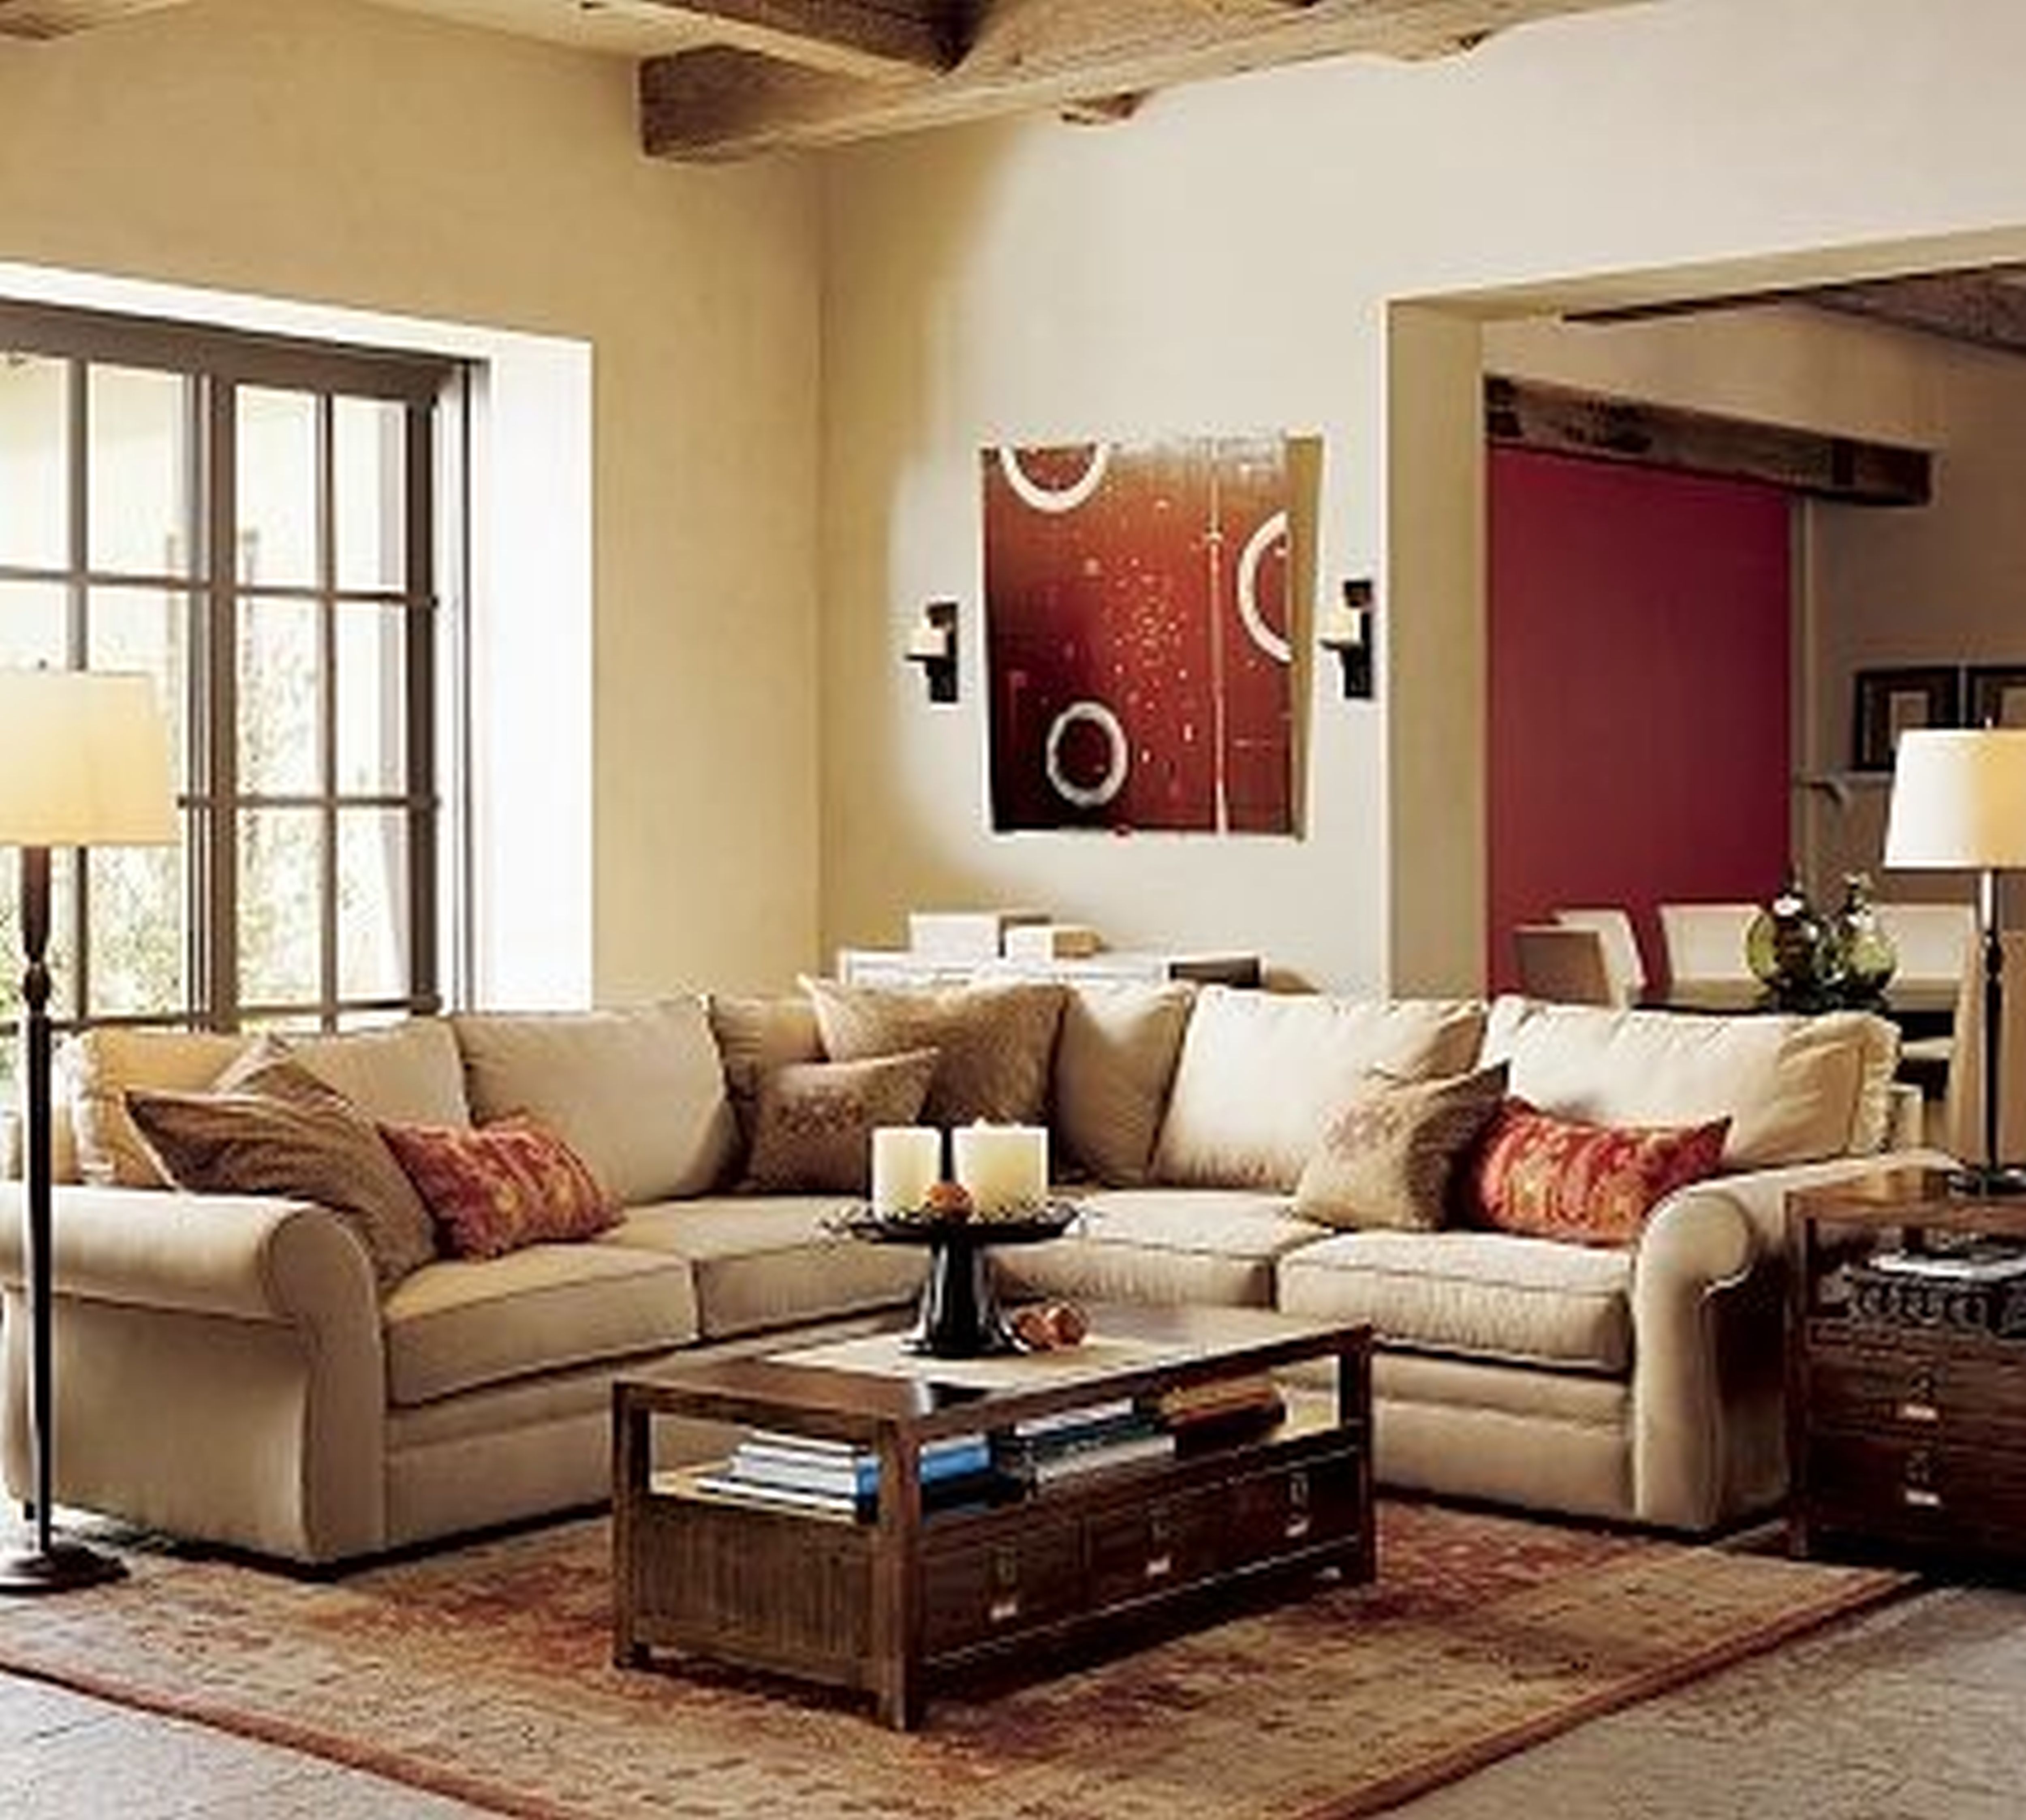 30 Cozy Home Decor Ideas For Your Home